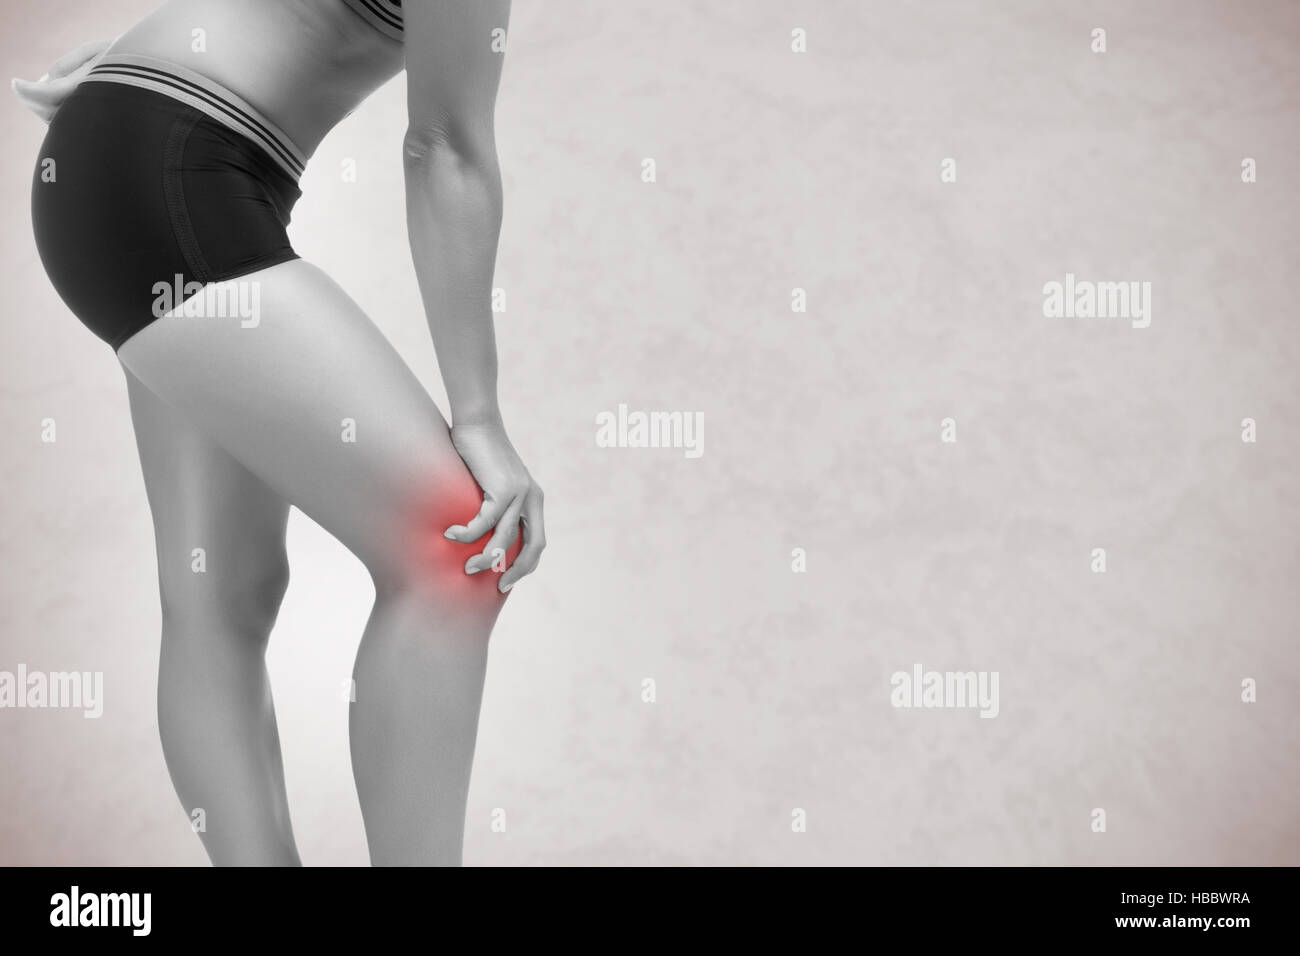 Knee Pain Stock Photo